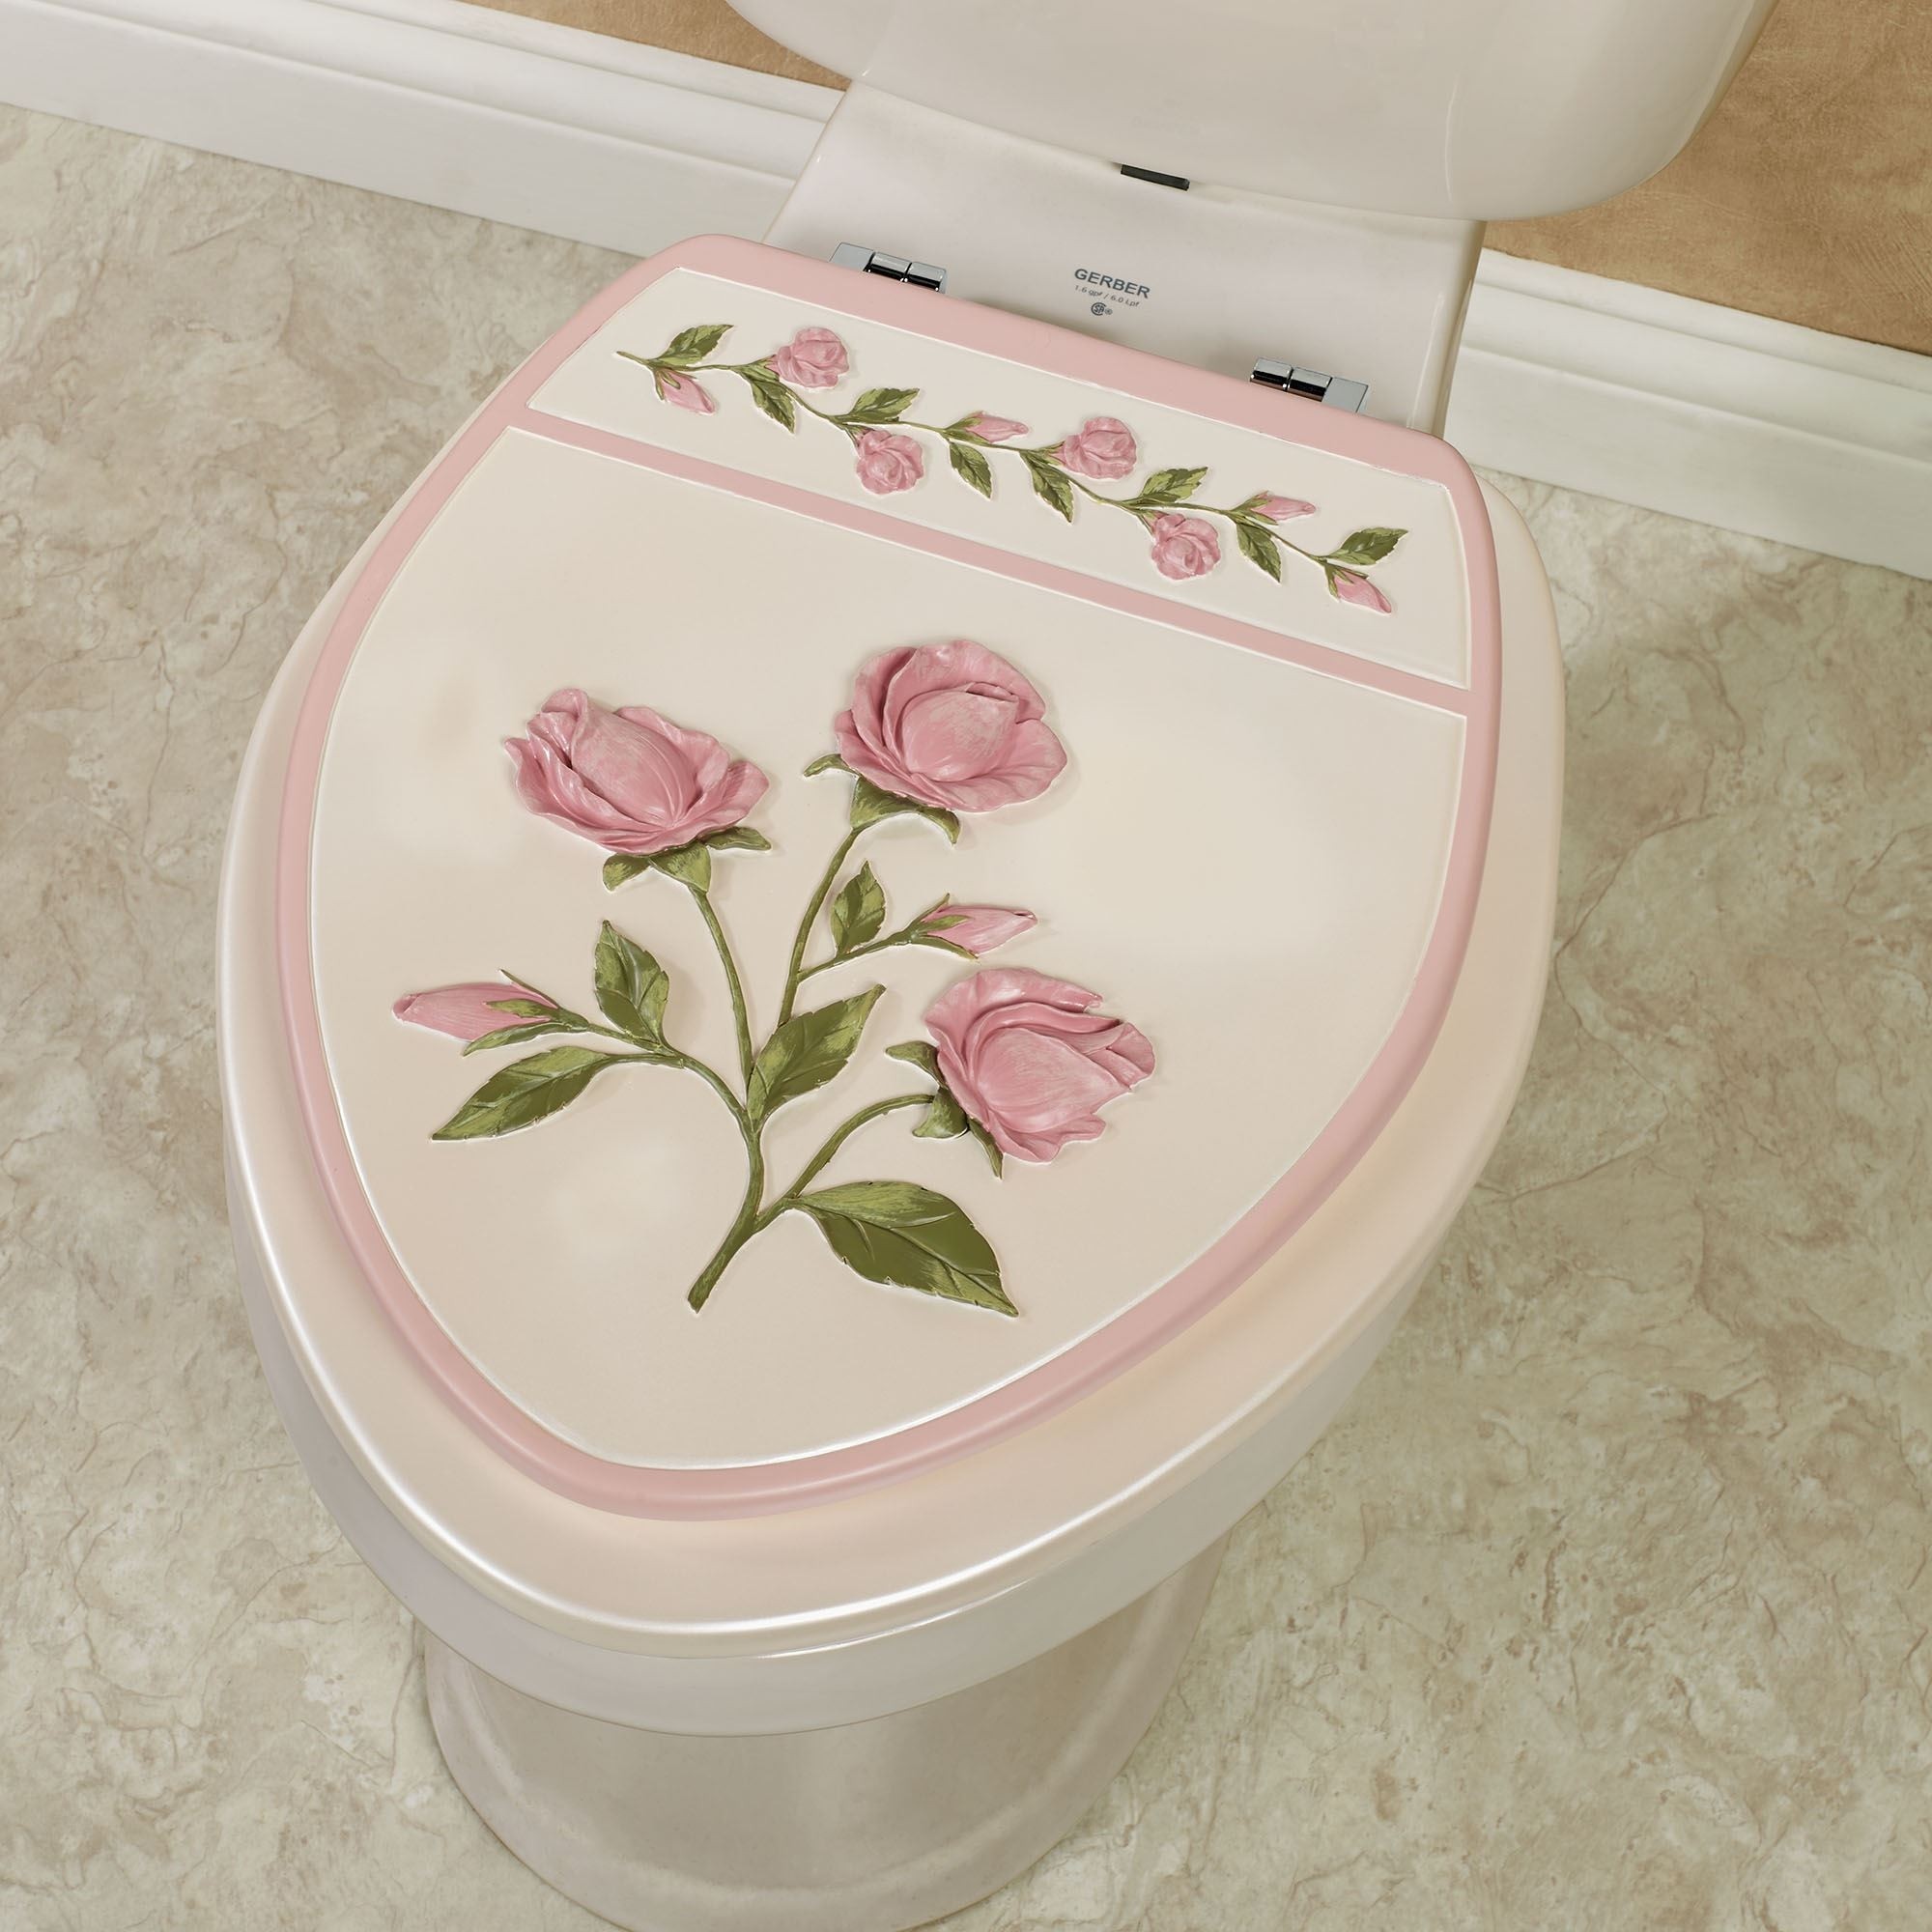 Bridal rose floral elongated toilet seat